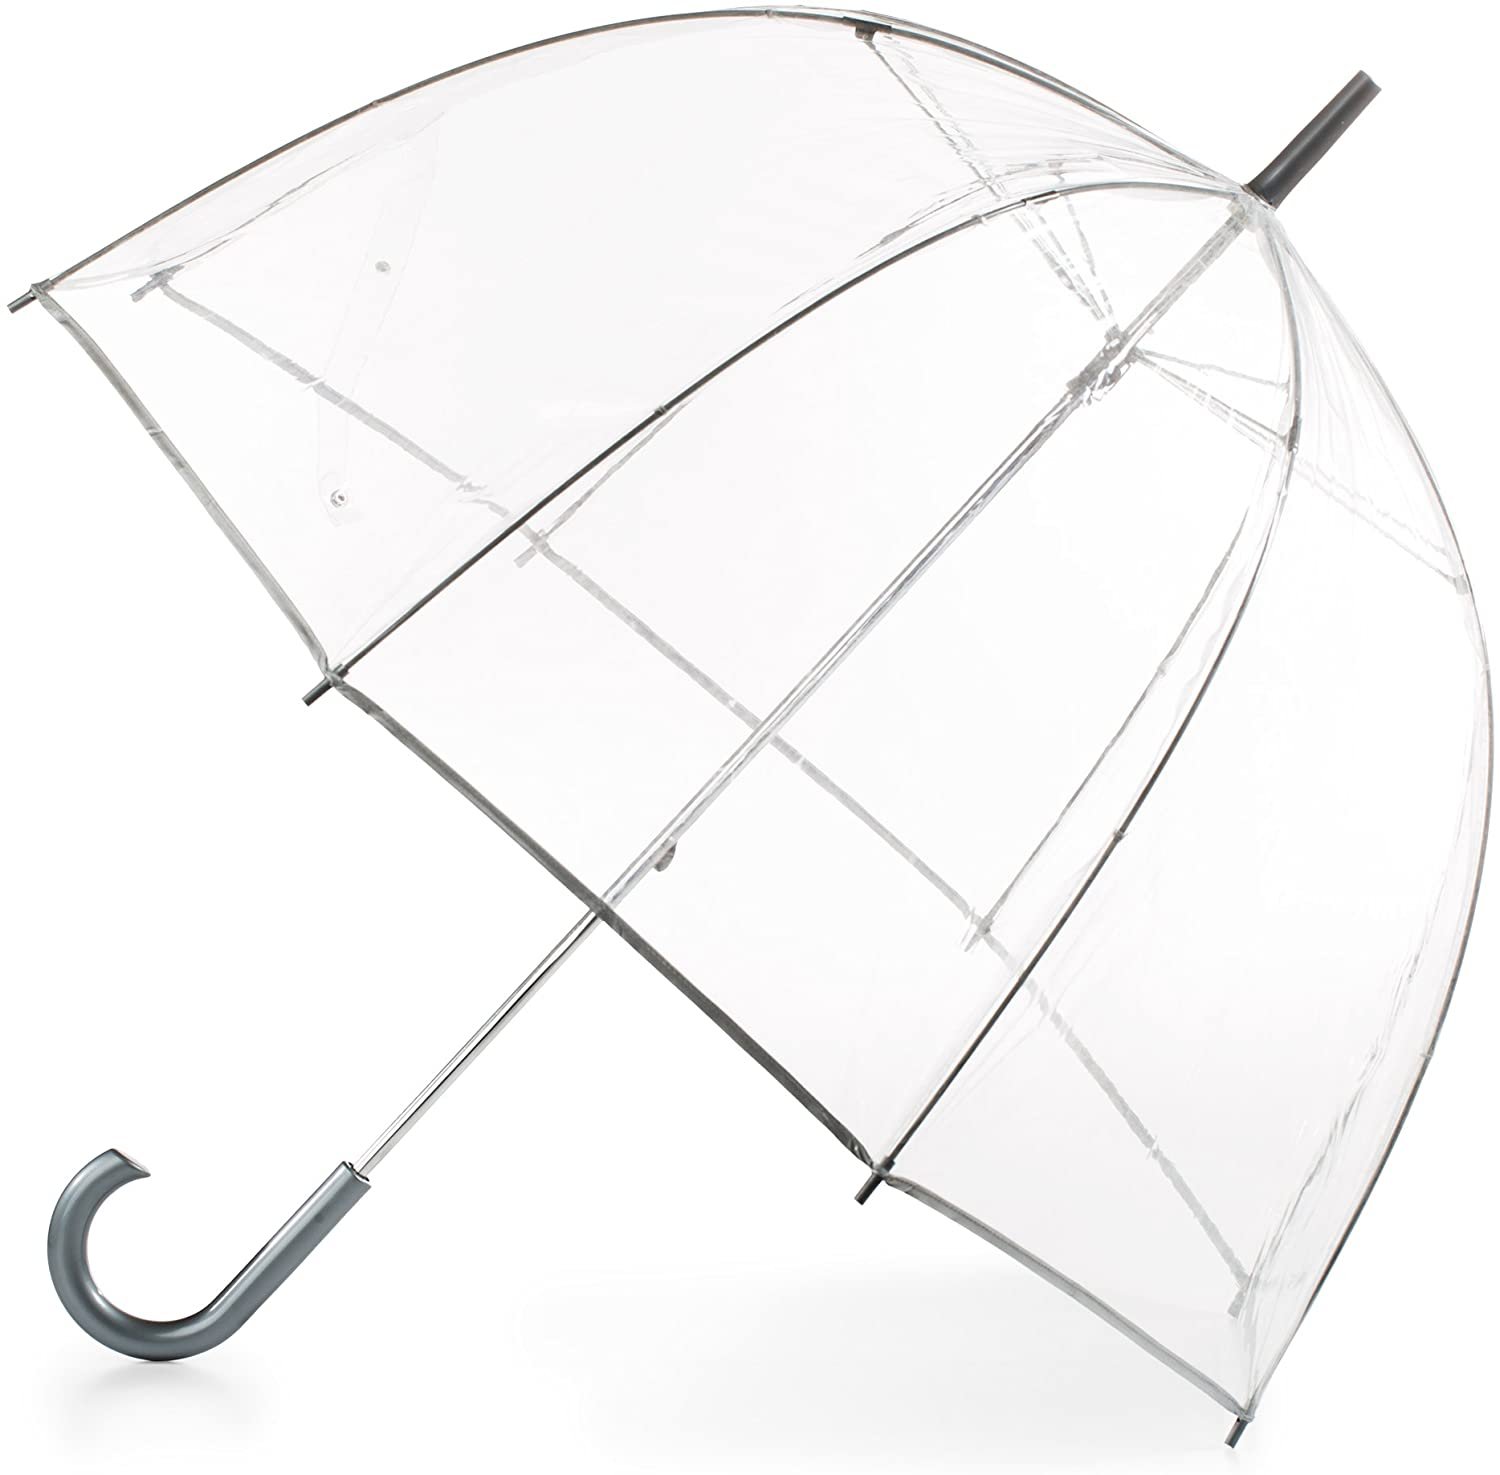 Transparent birdcage umbrella with silver handle